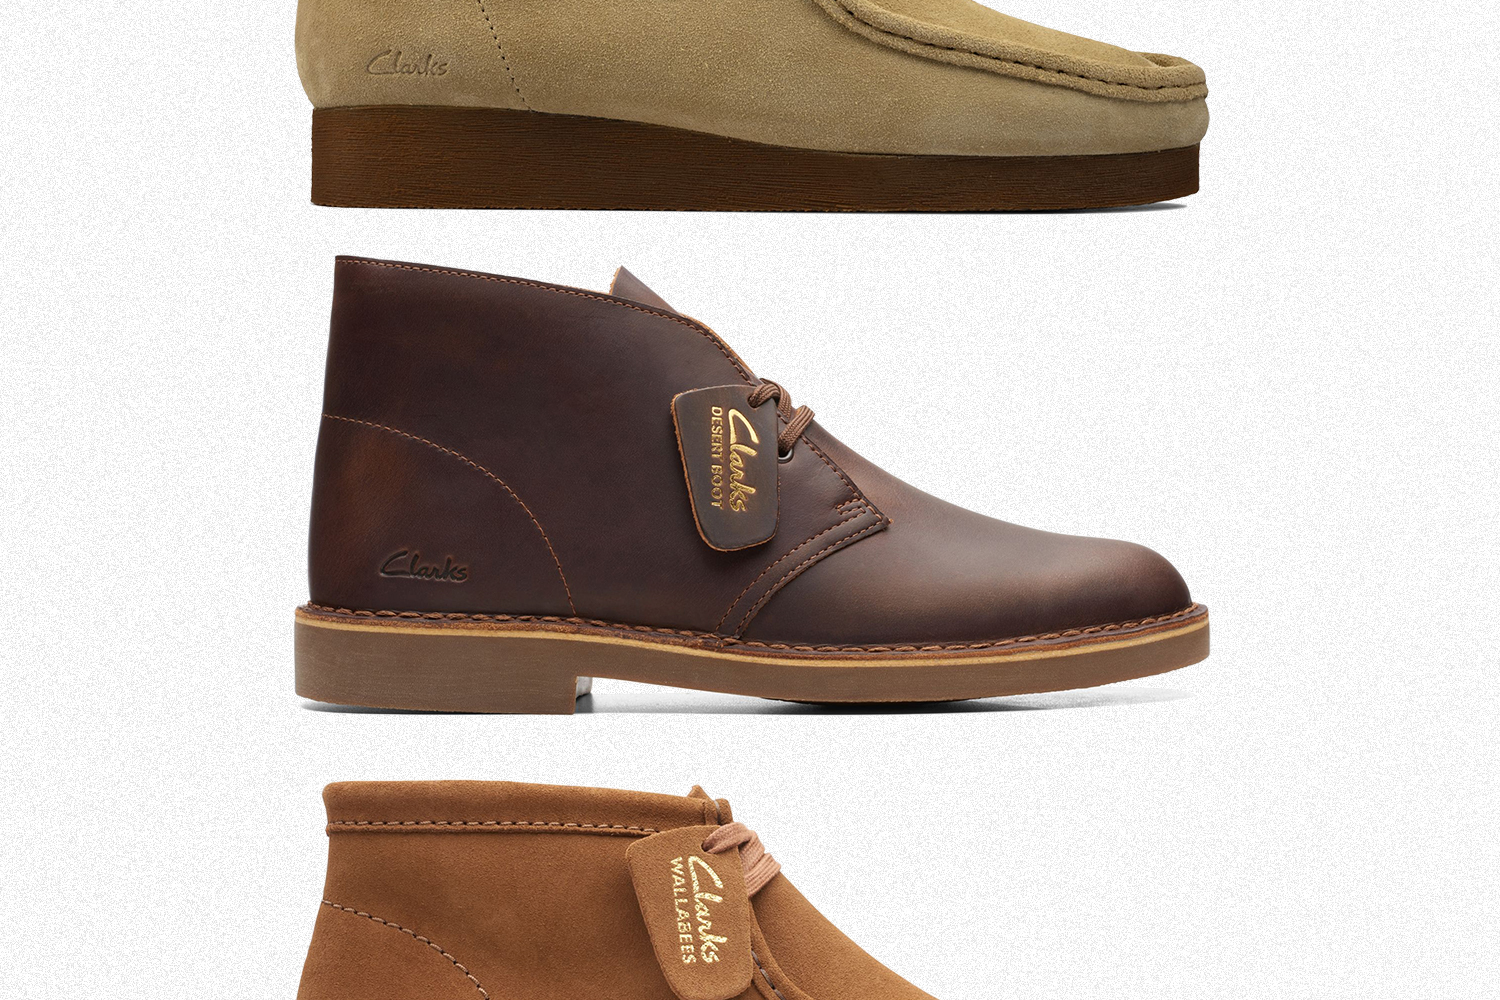 At understrege spids sikkerhedsstillelse Clarks Desert Boots, Wallabees Are Included in the Fall Sale - InsideHook